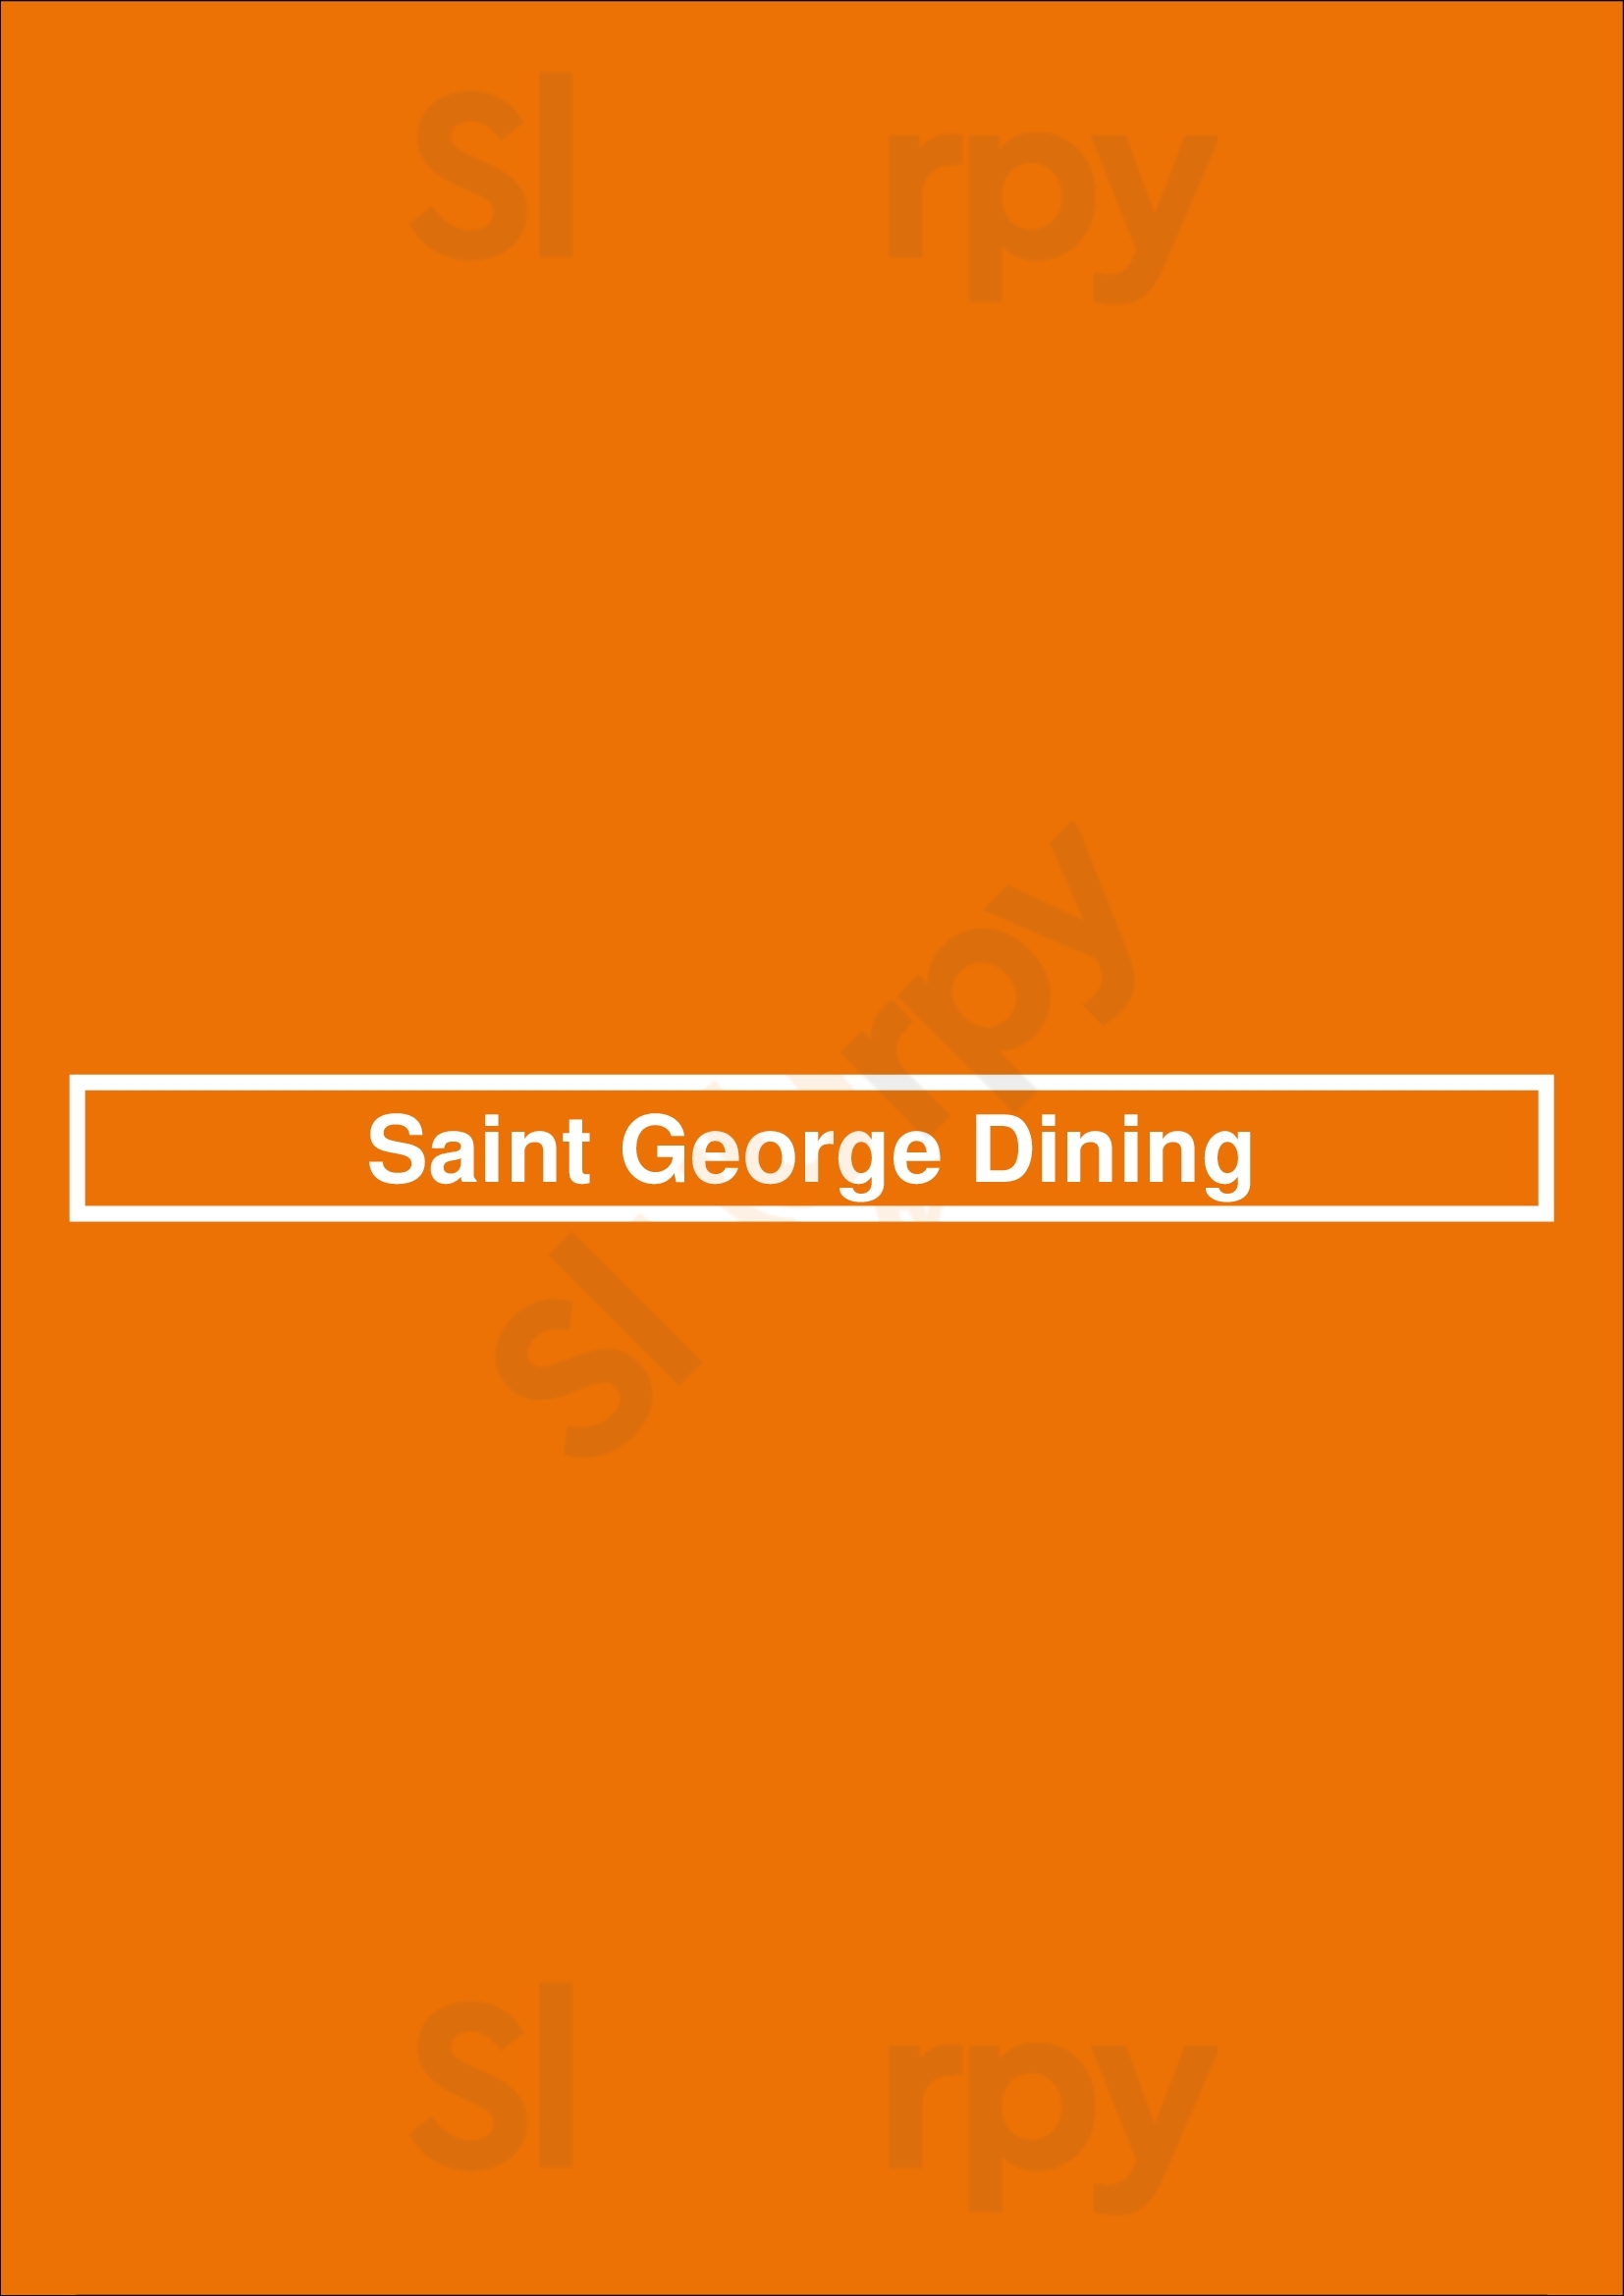 Saint George Dining Sydney Menu - 1